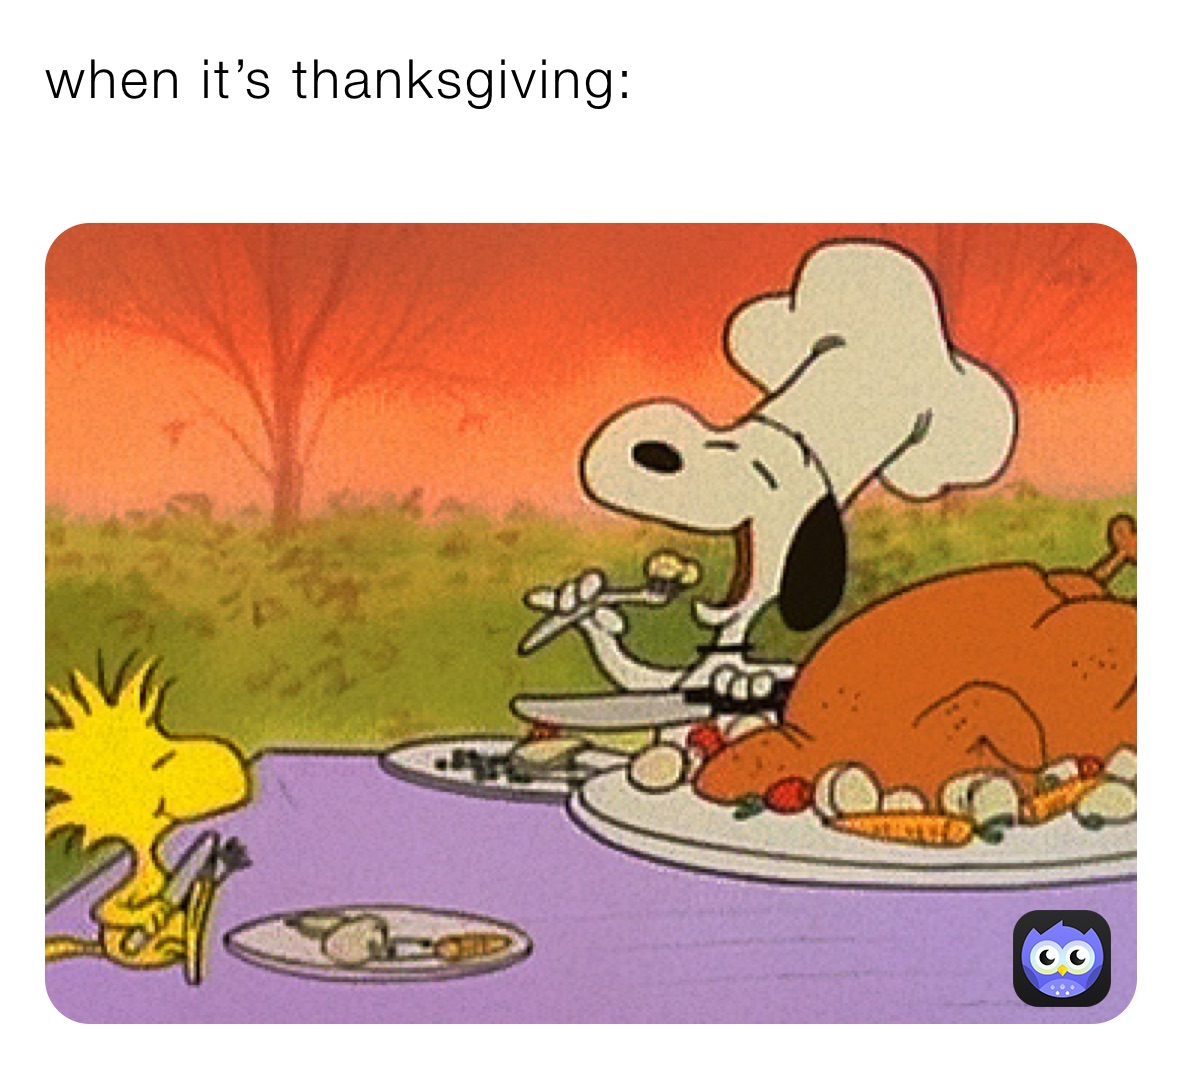 when it’s thanksgiving: 
